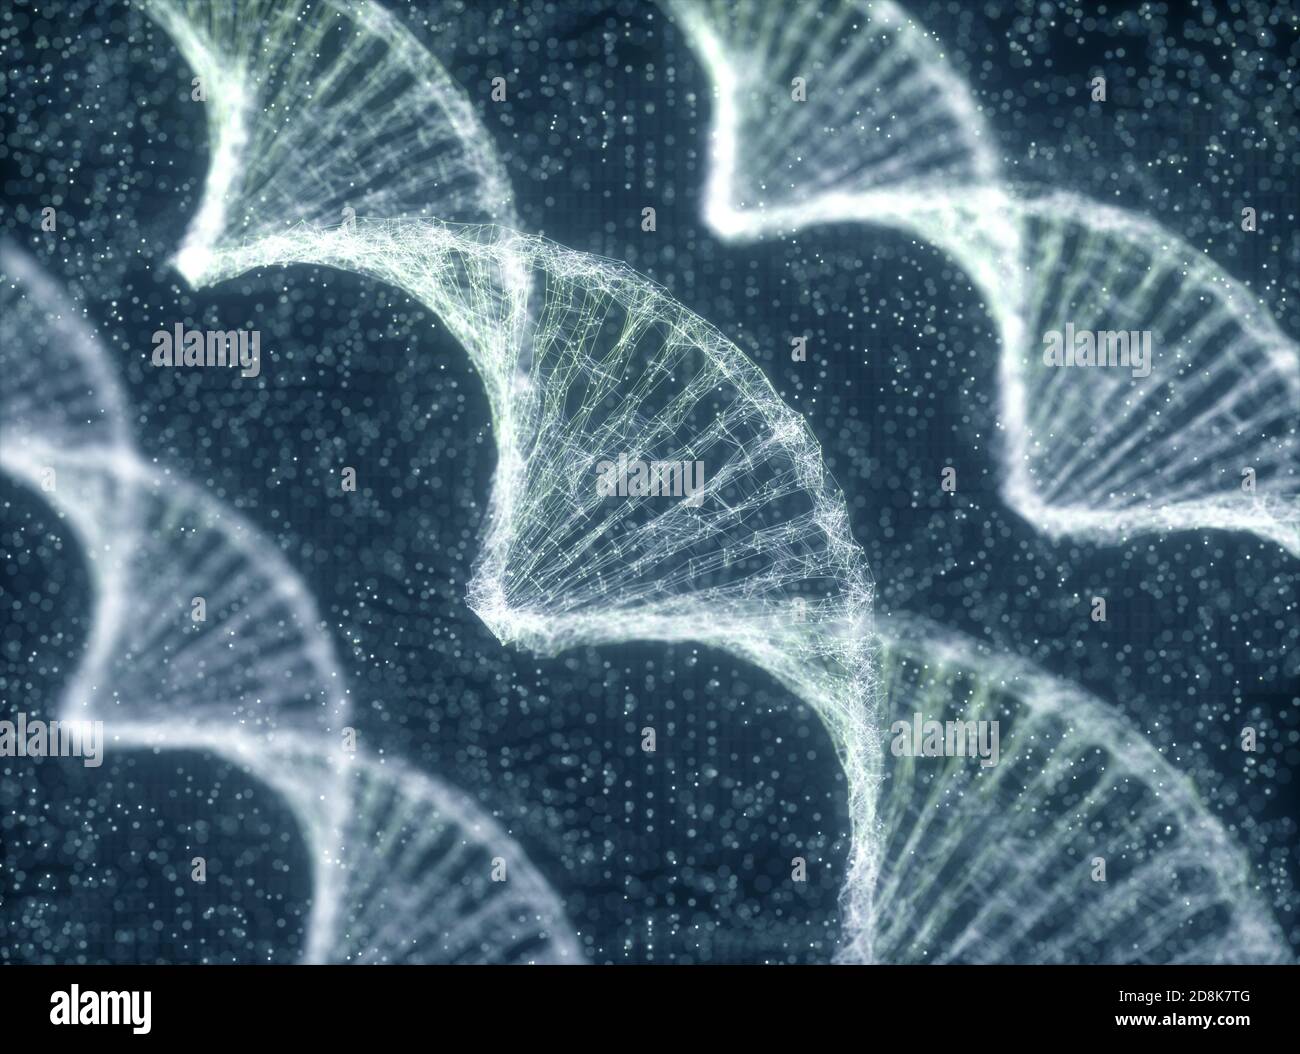 DNA (deoxyribonucleic acid) molecules, illustration. Stock Photo